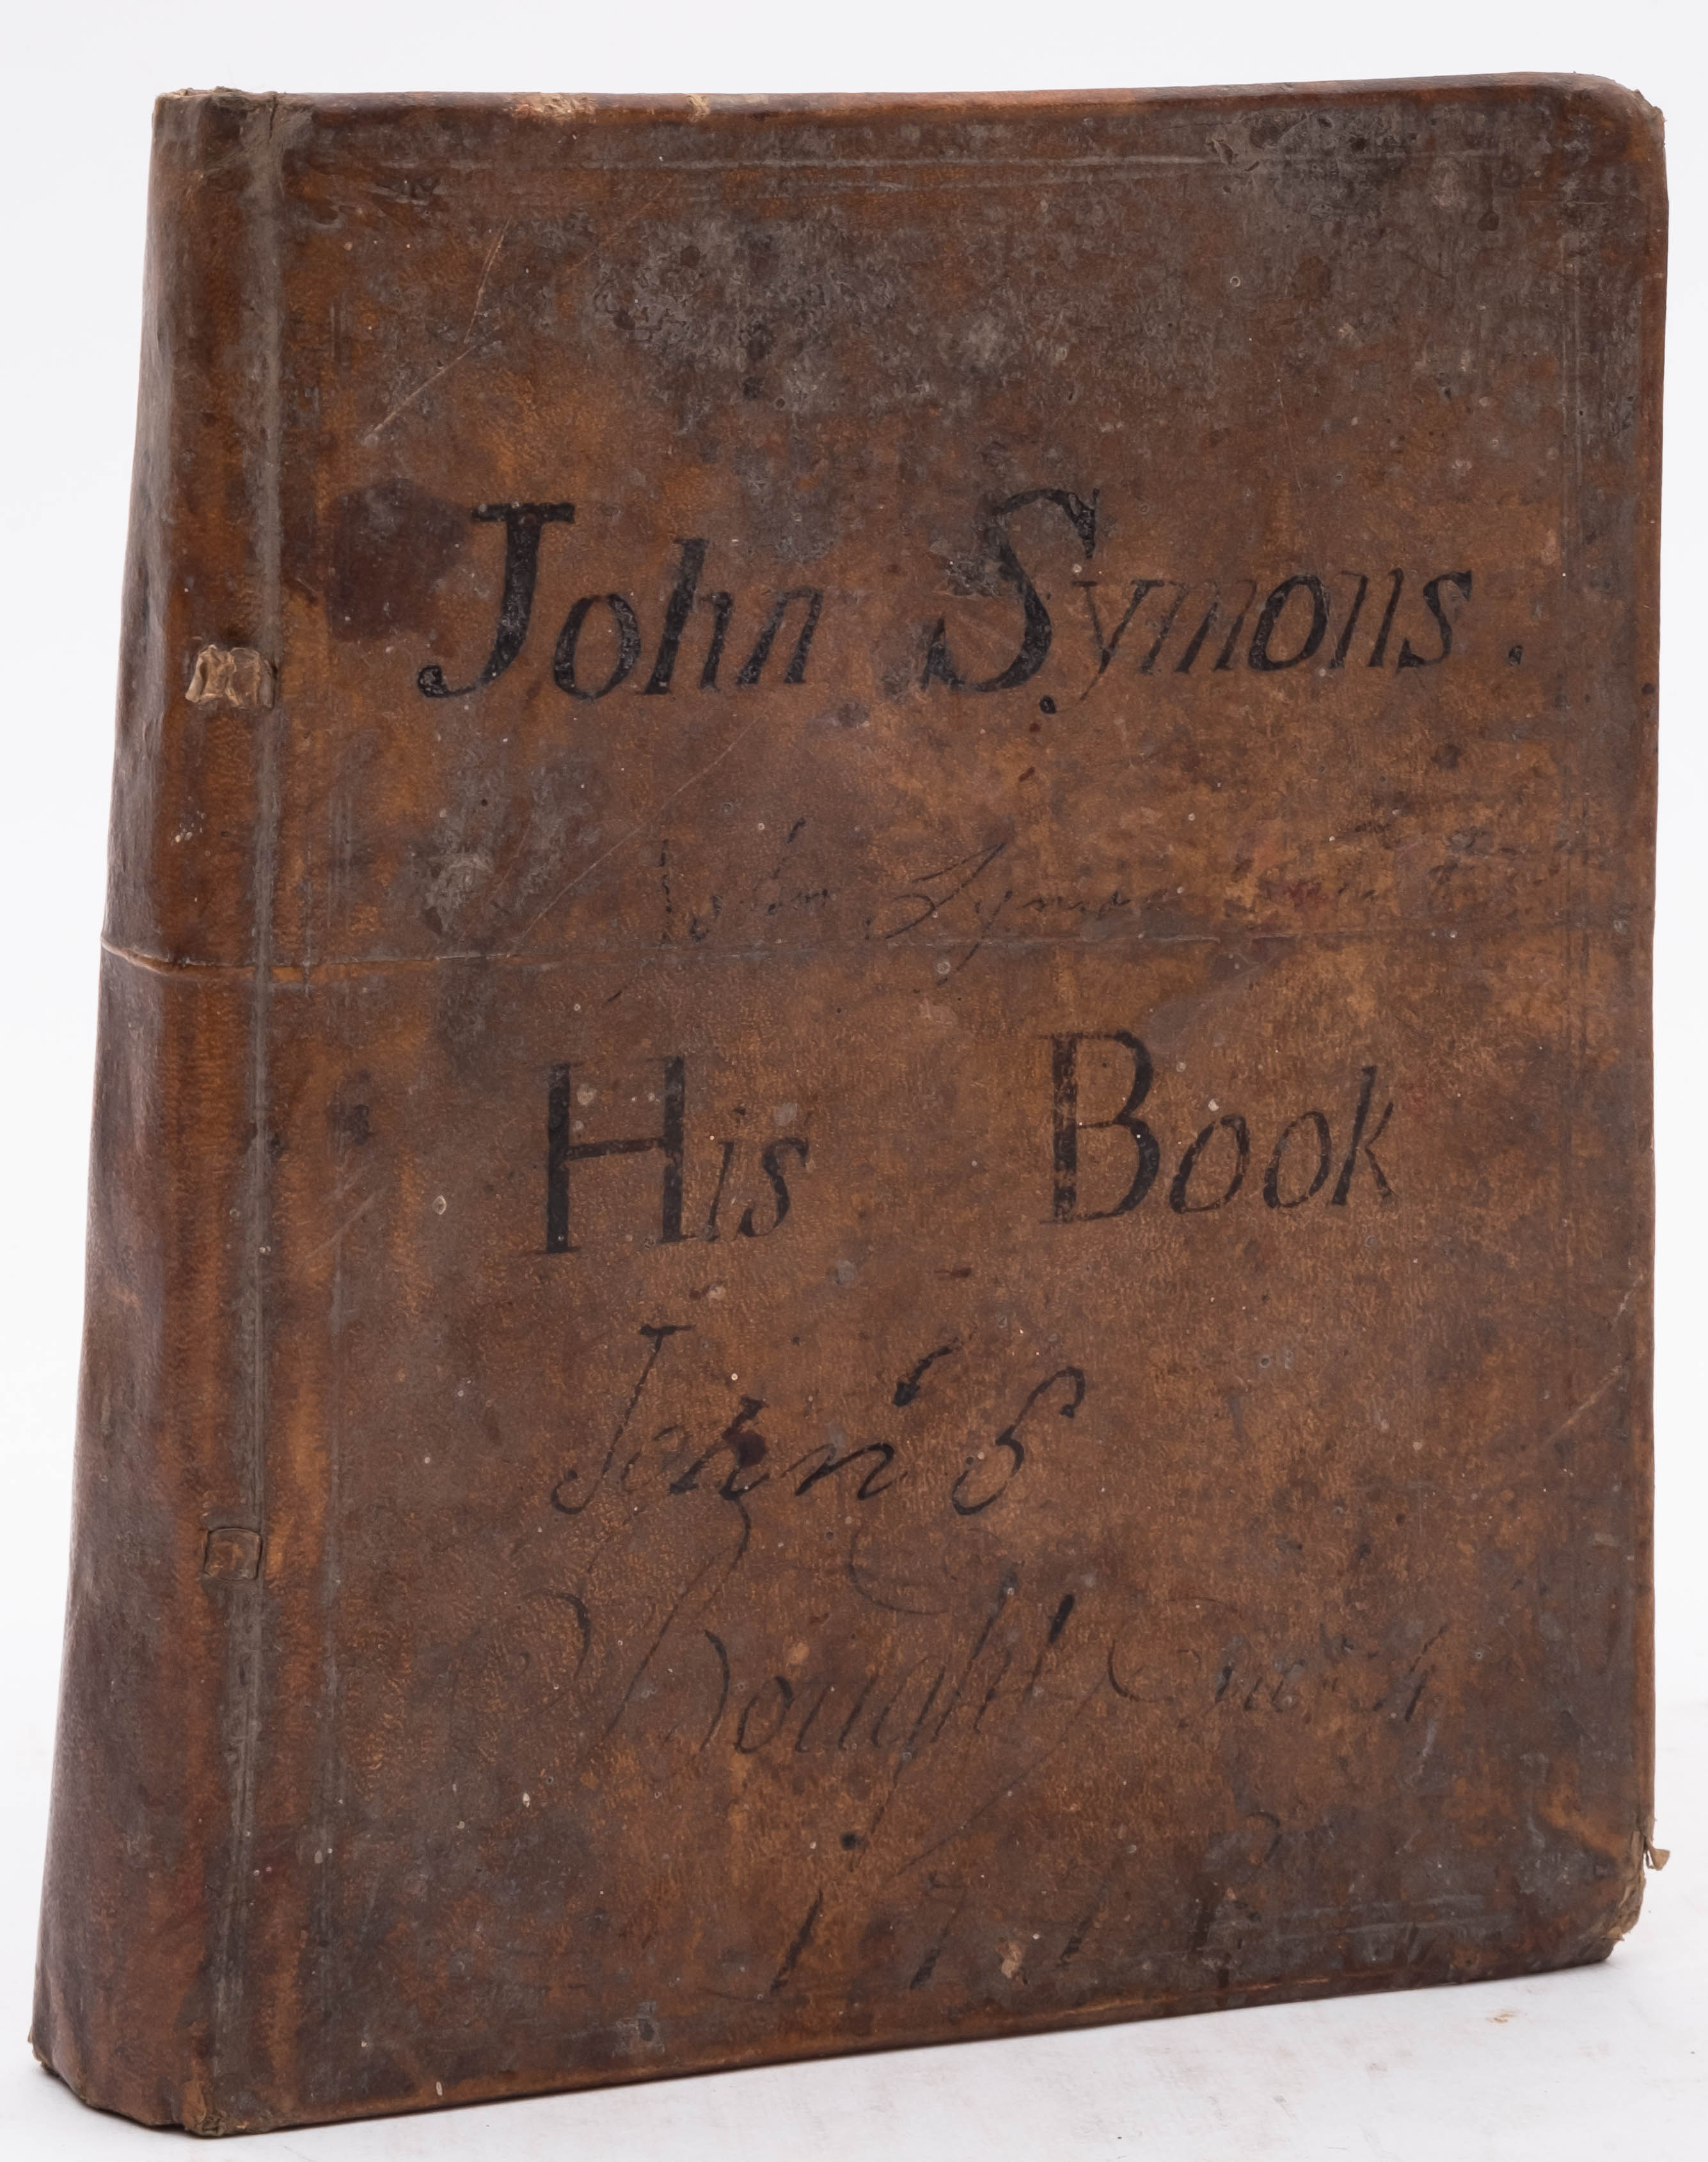 MANUSCRIPT - School Arithmetic book of 'John C. Symons His Book 1772.' 240 pages. - Image 2 of 3